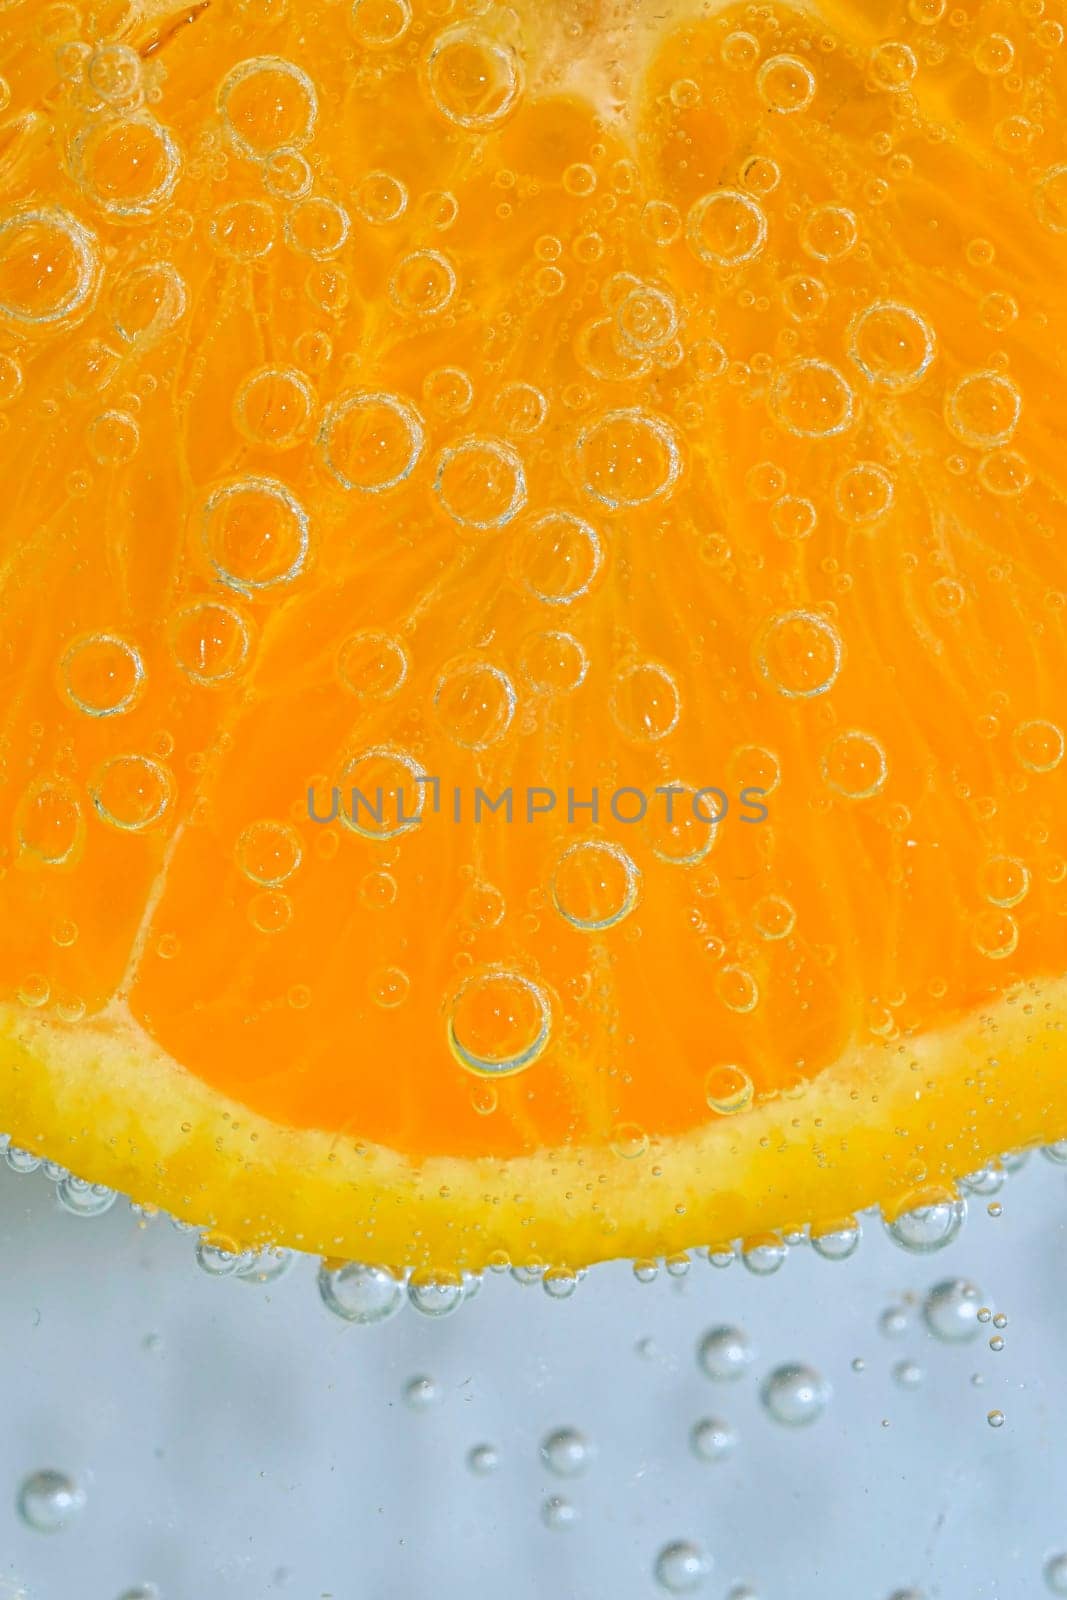 Slice of ripe orange fruit in water on white background. Close-up of orange fruit in liquid with bubbles. Slice of ripe orange fruit in sparkling water. Macro image of fruit in carbonated water